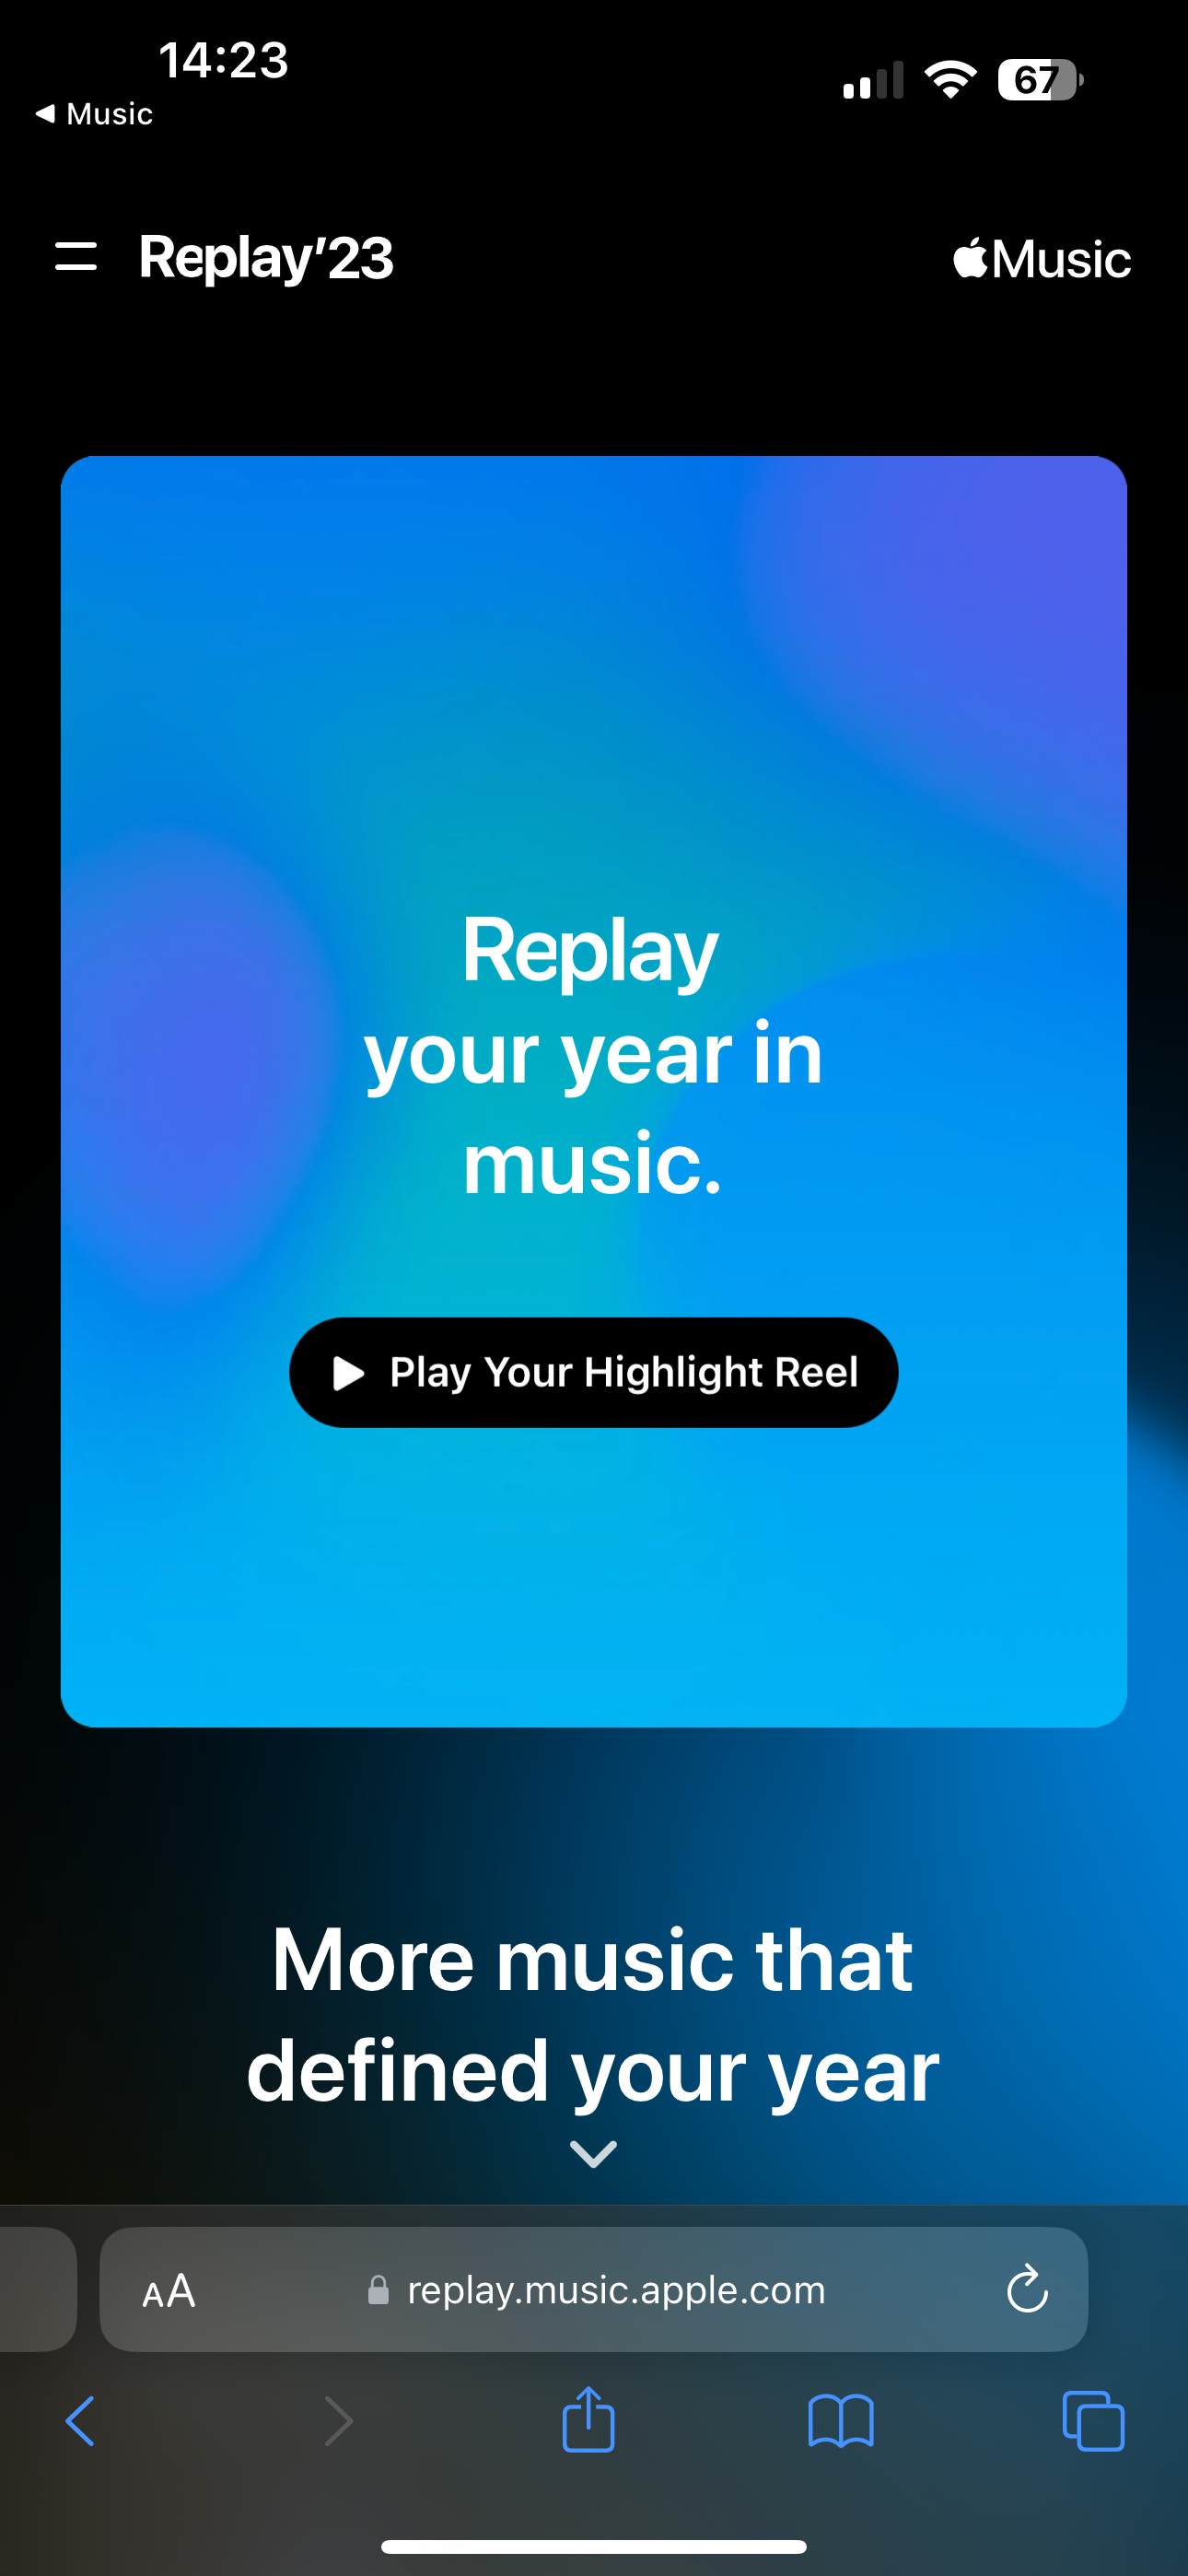 Reproduzca su carrete destacado Apple Music Replay 23